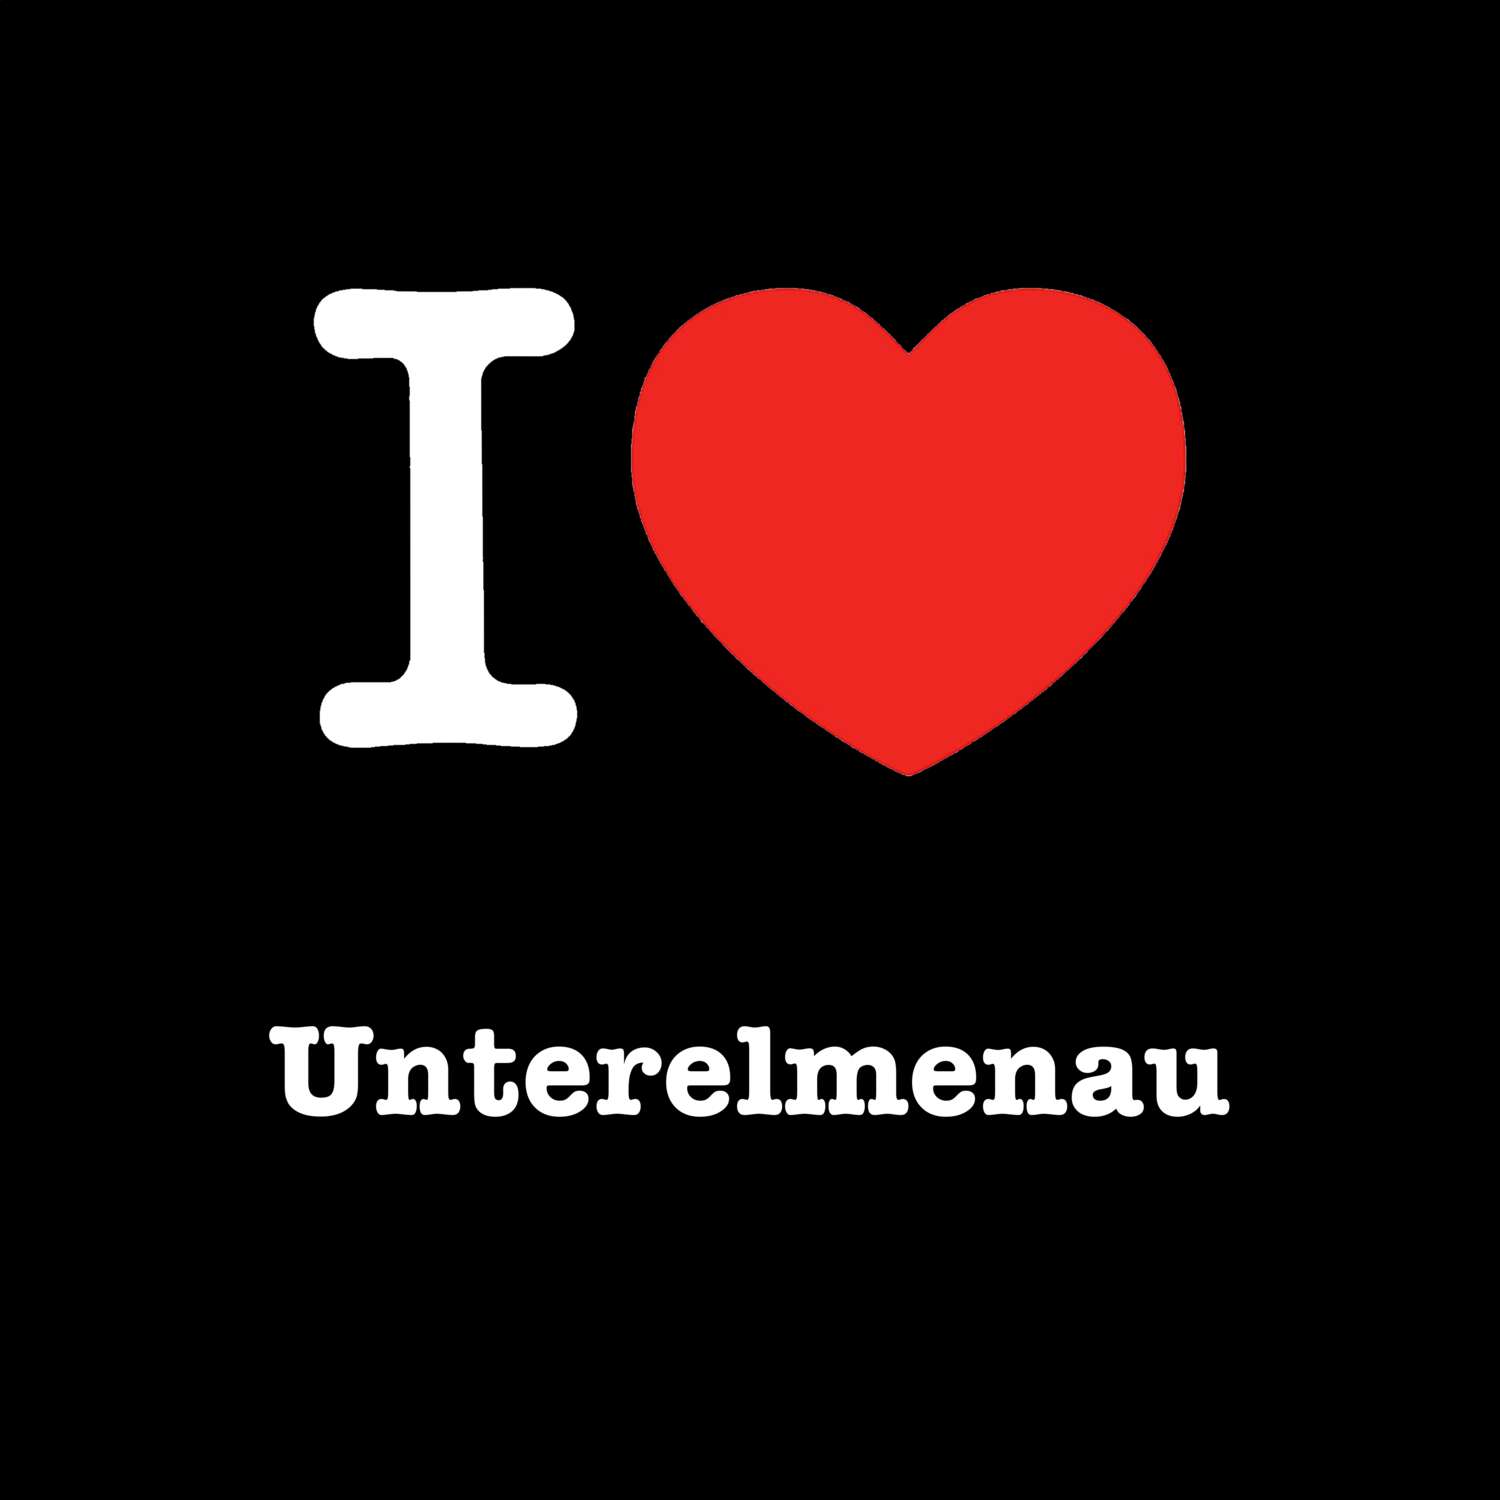 Unterelmenau T-Shirt »I love«